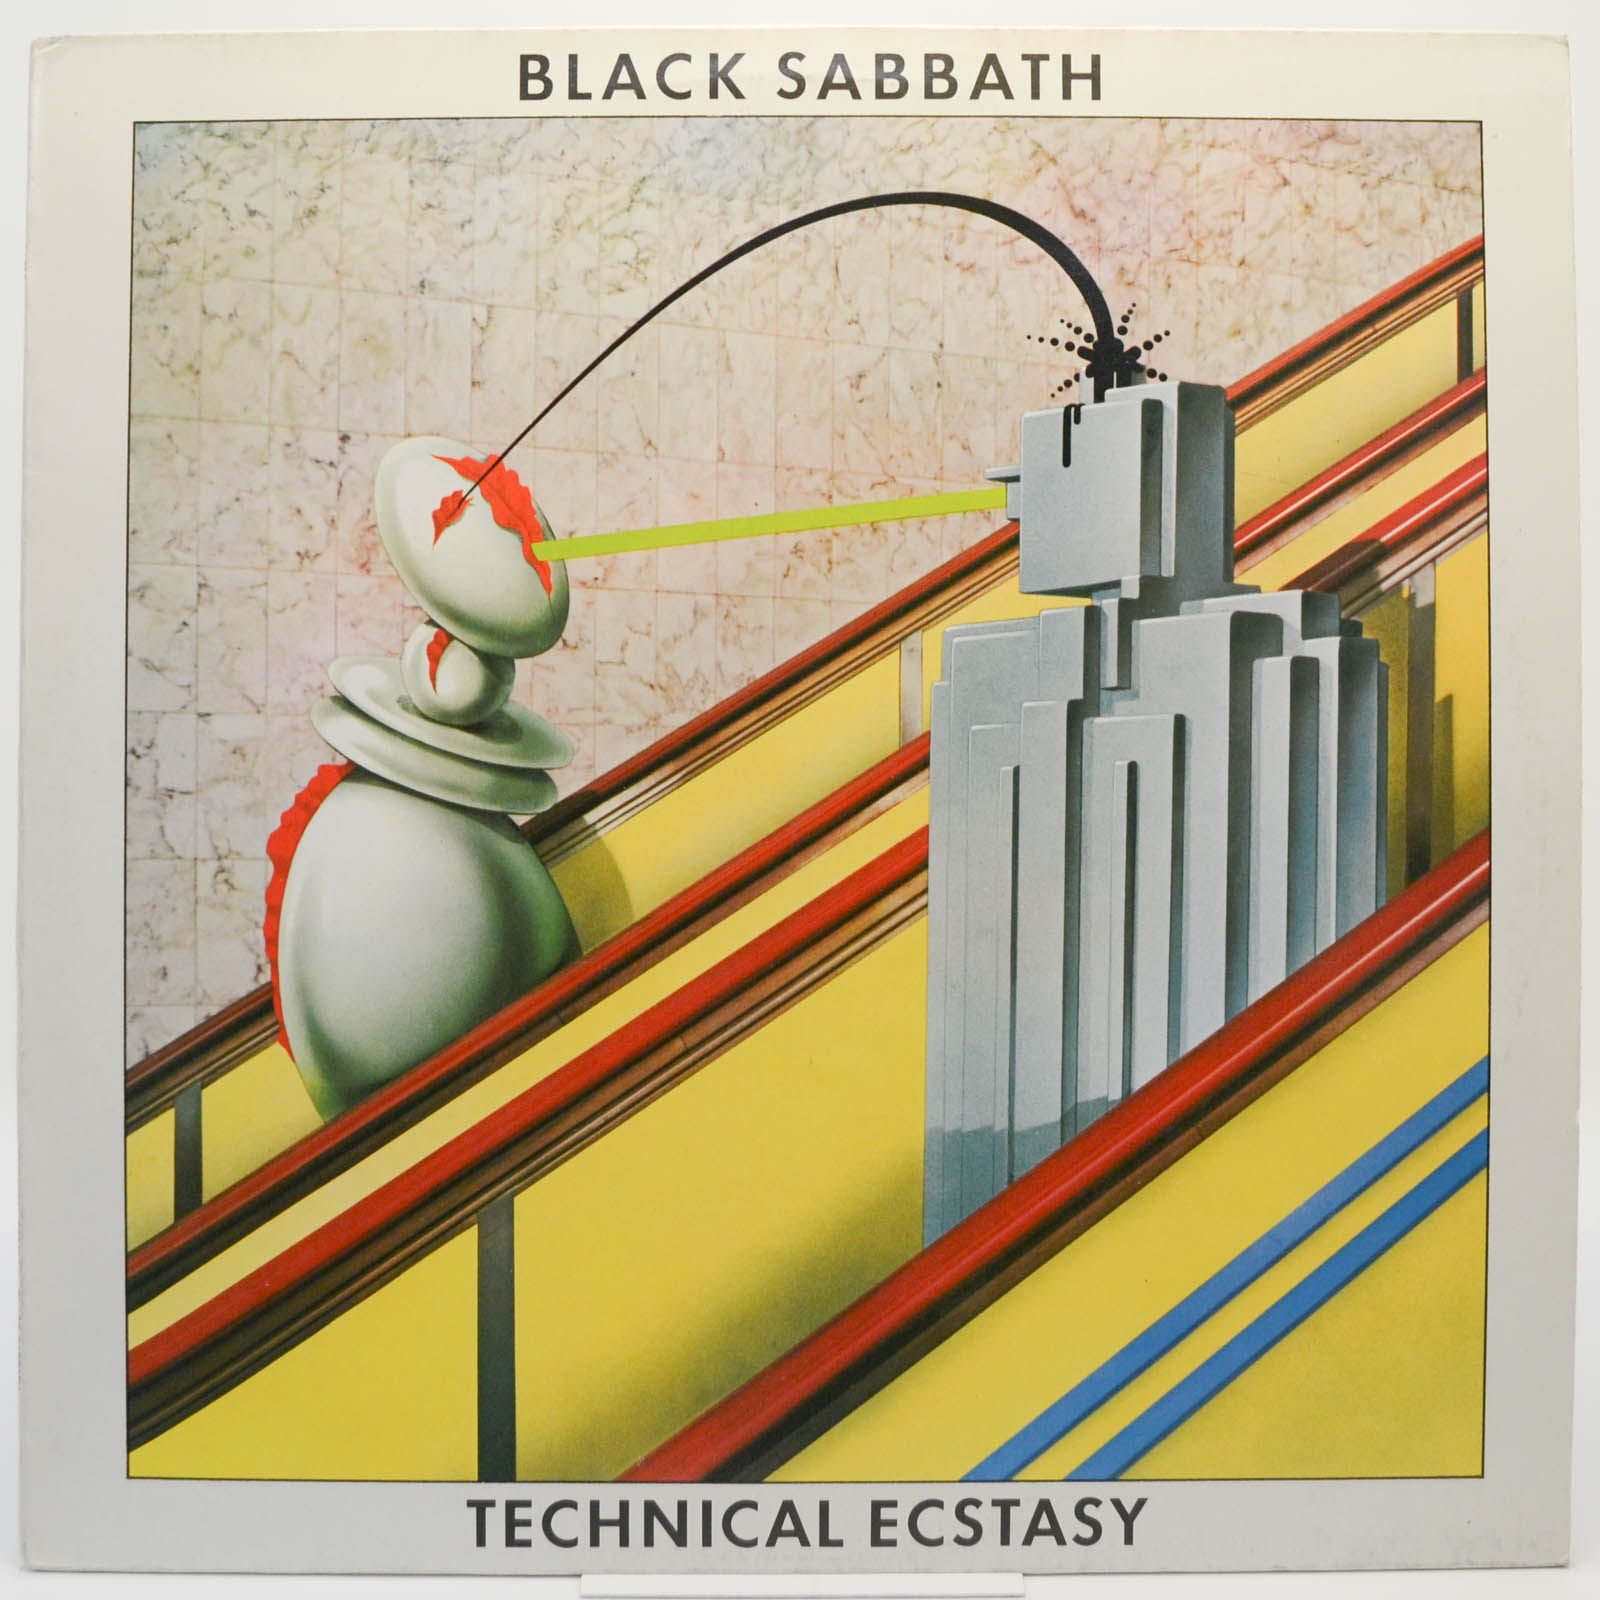 Black Sabbath — Technical Ecstasy, 1976